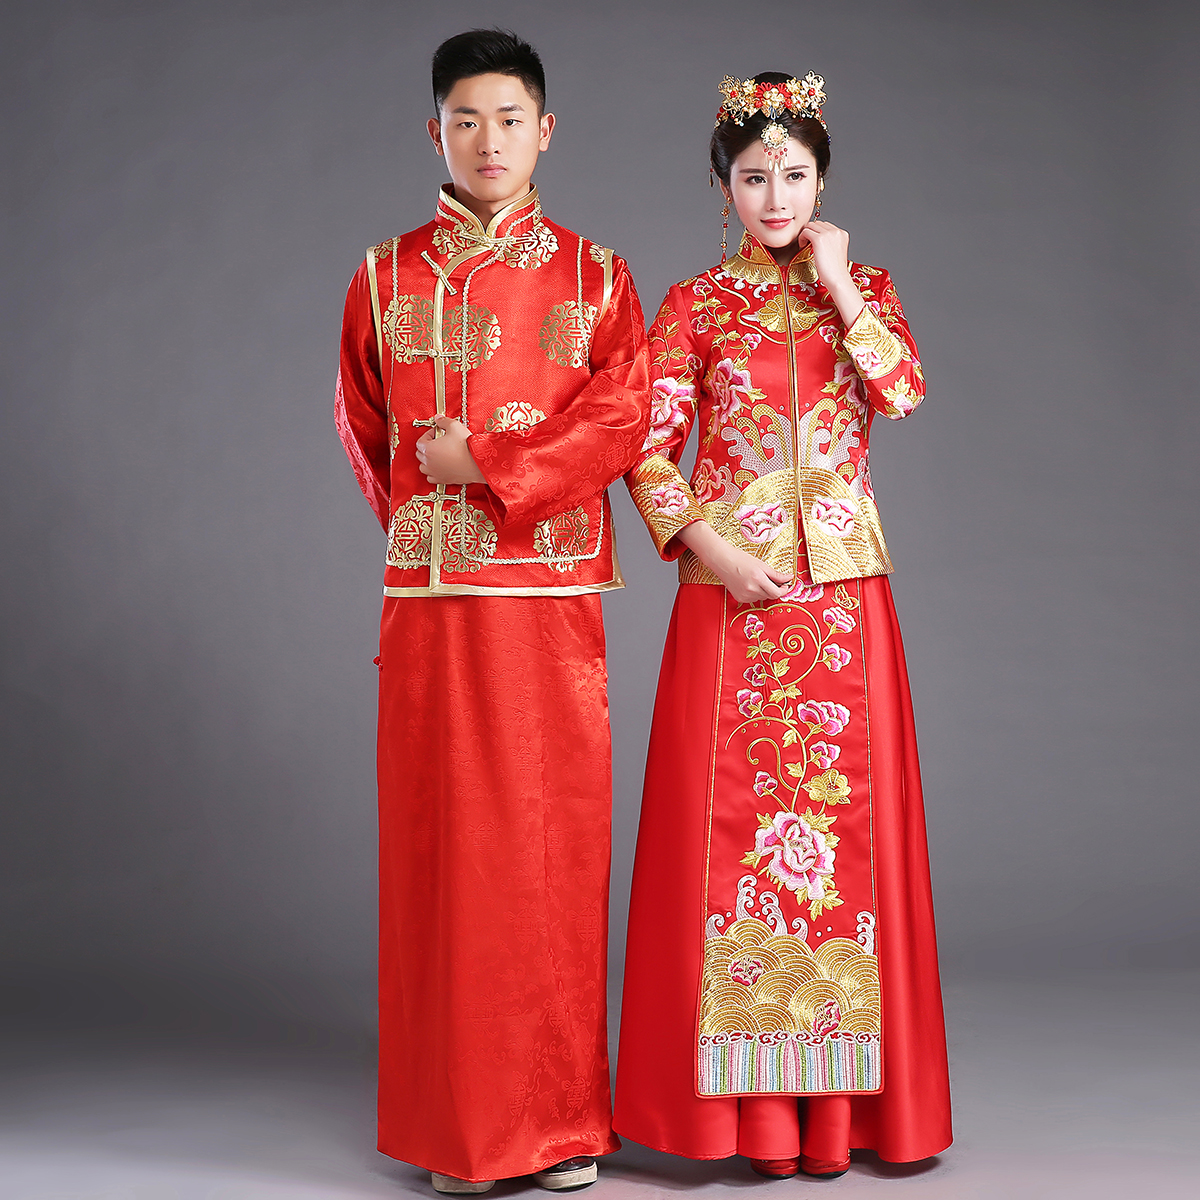 The Malaysia MultiCultural Pakaian Tradisional Cina